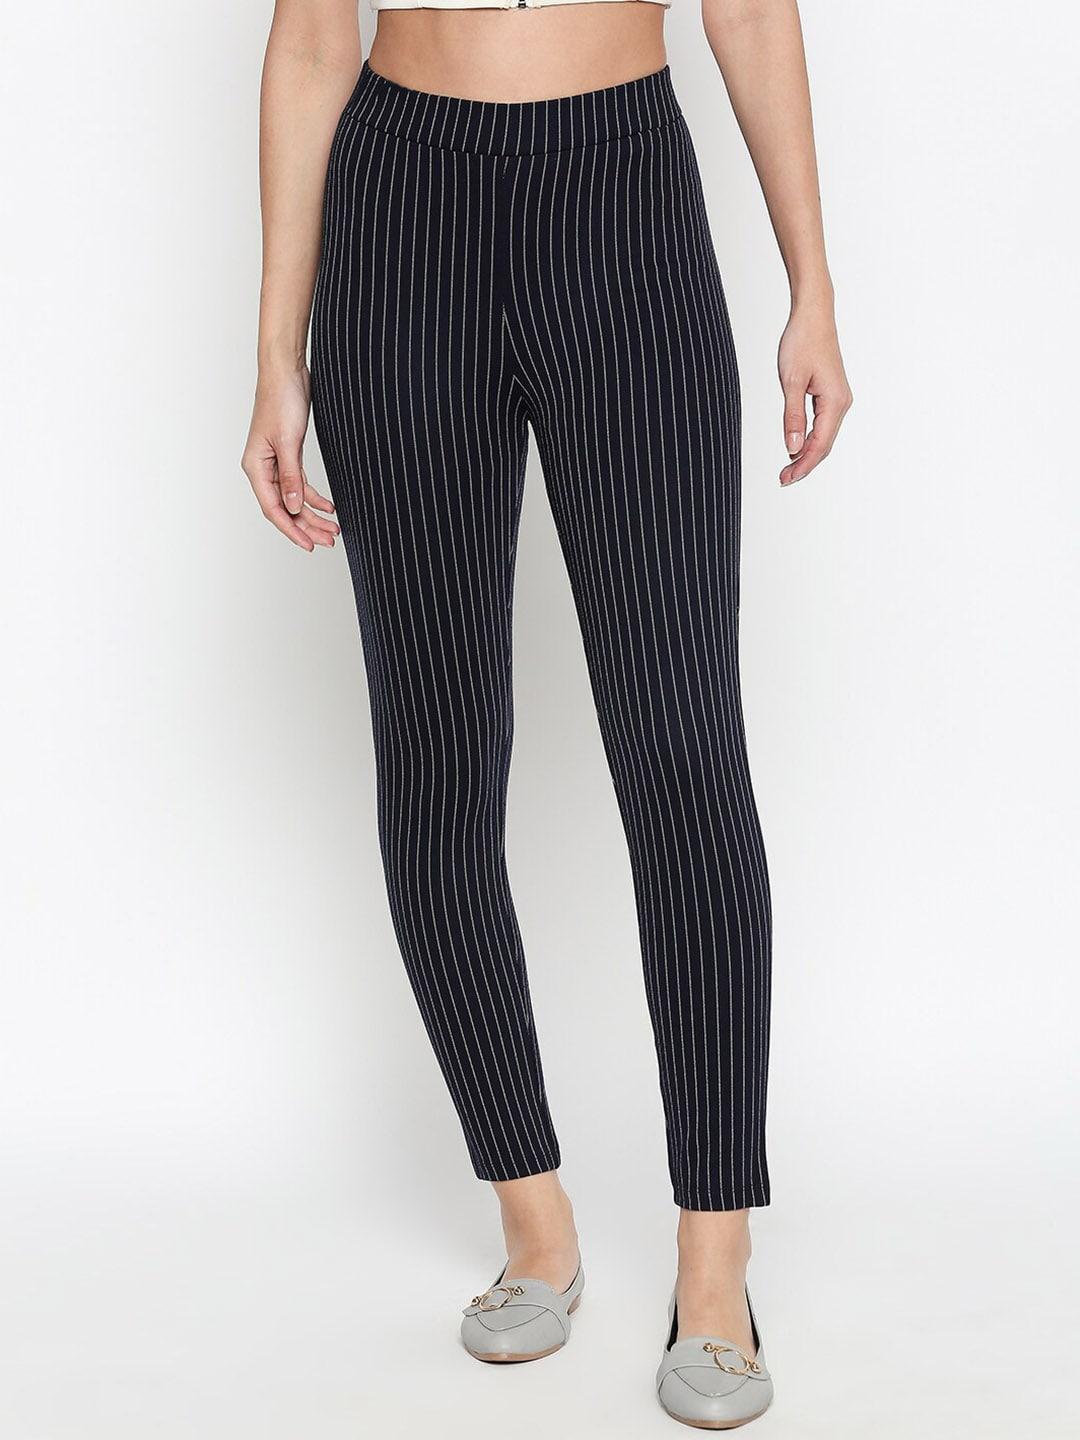 annabelle by pantaloons women navy blue & white striped skinny-fit treggings